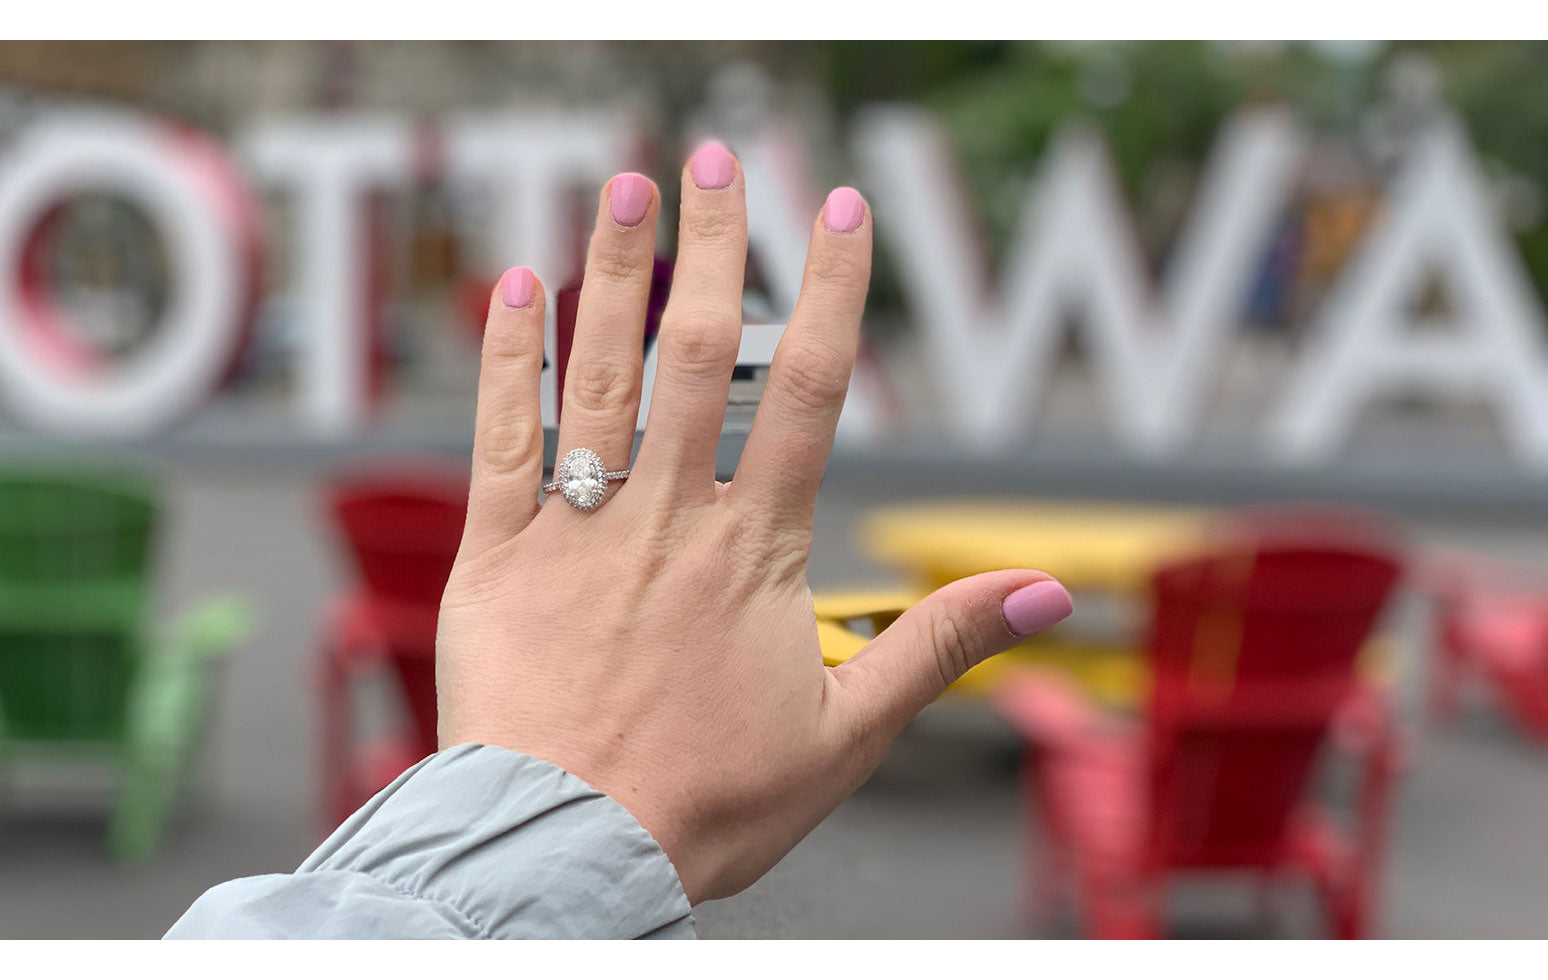 Amanda's engagement ring